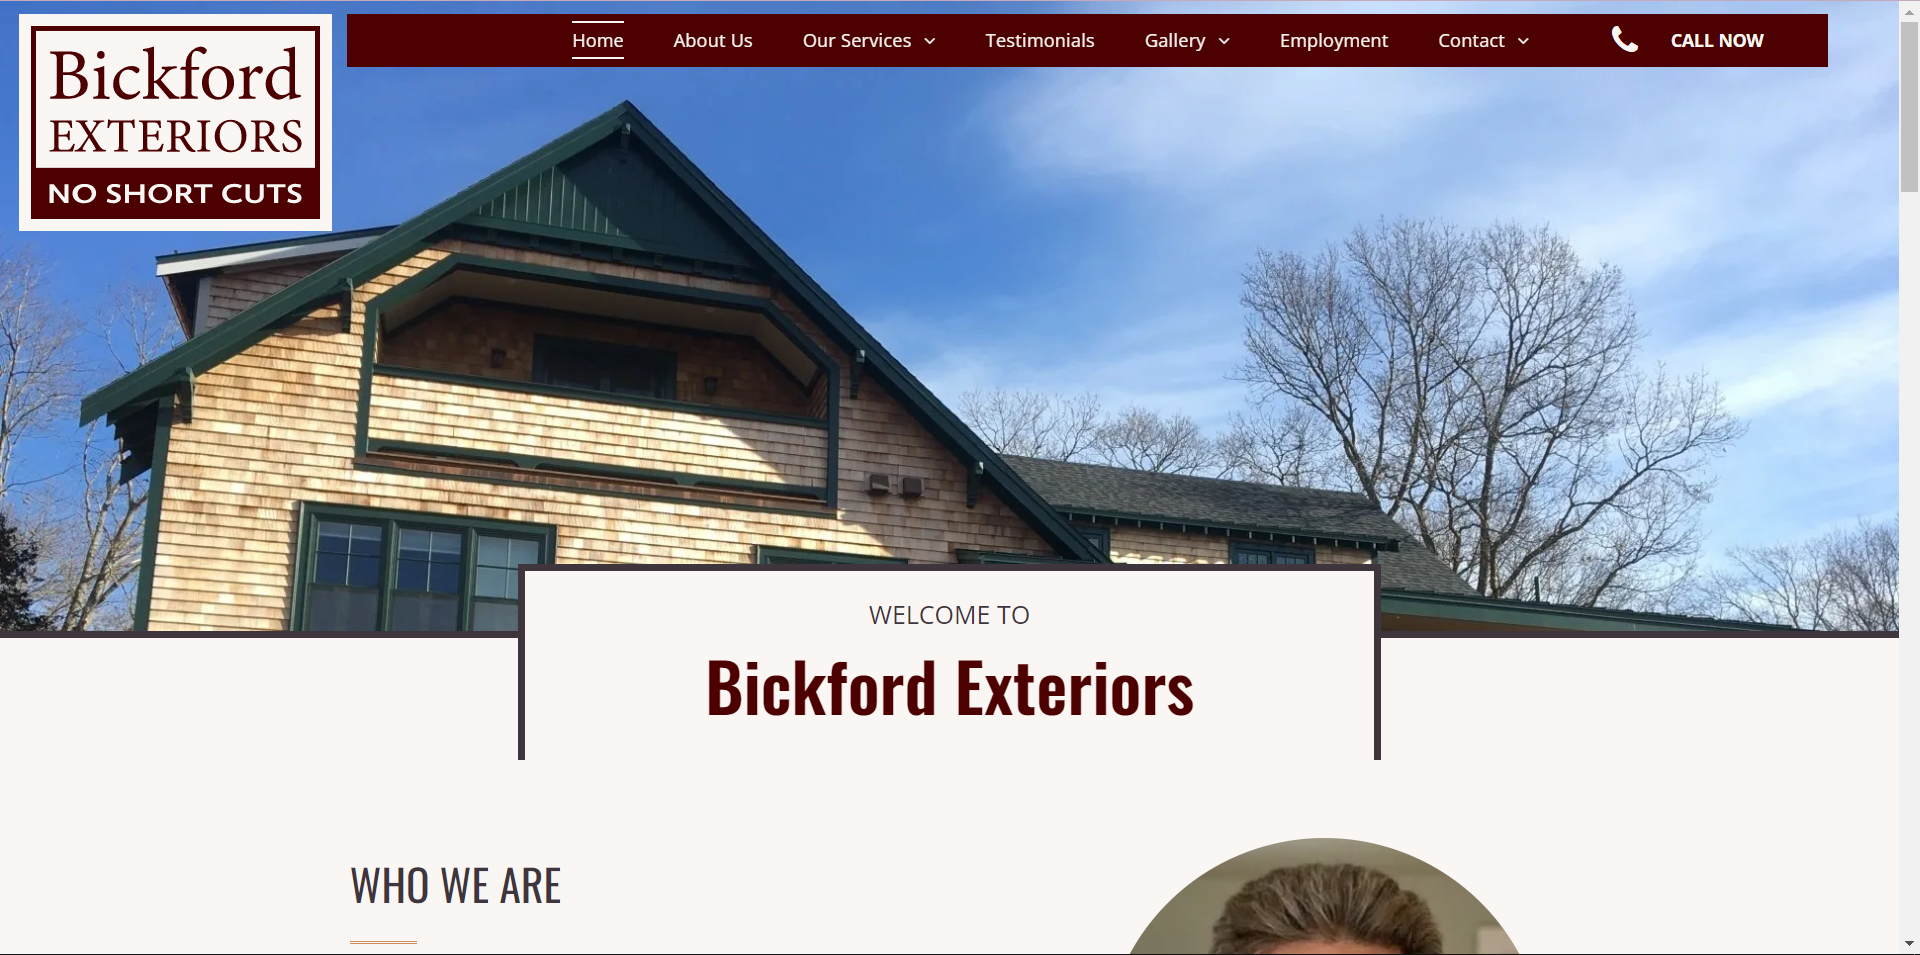 BickfordExteriors.com homepage